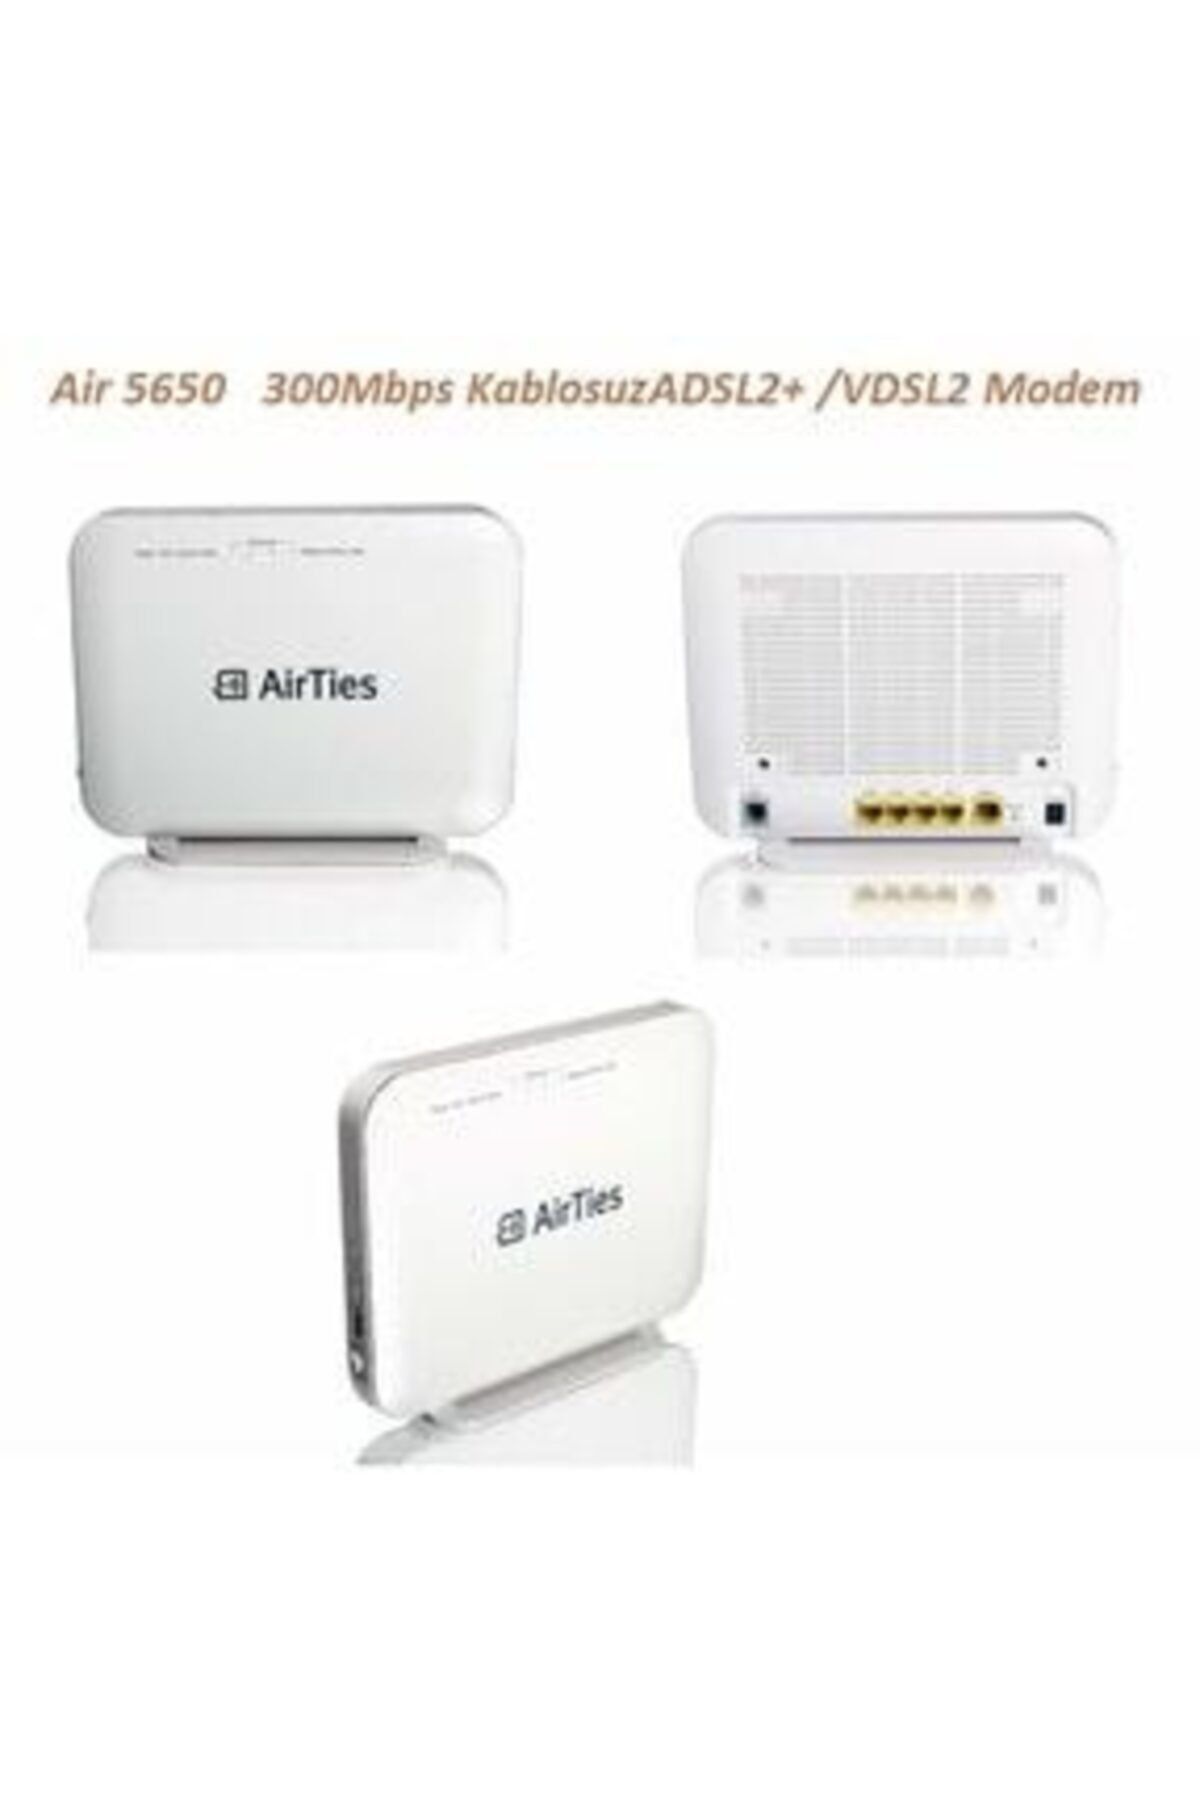 Airties Air 5650 300 Mbps Kablosuz Adsl2+vdsl2 Modem Router